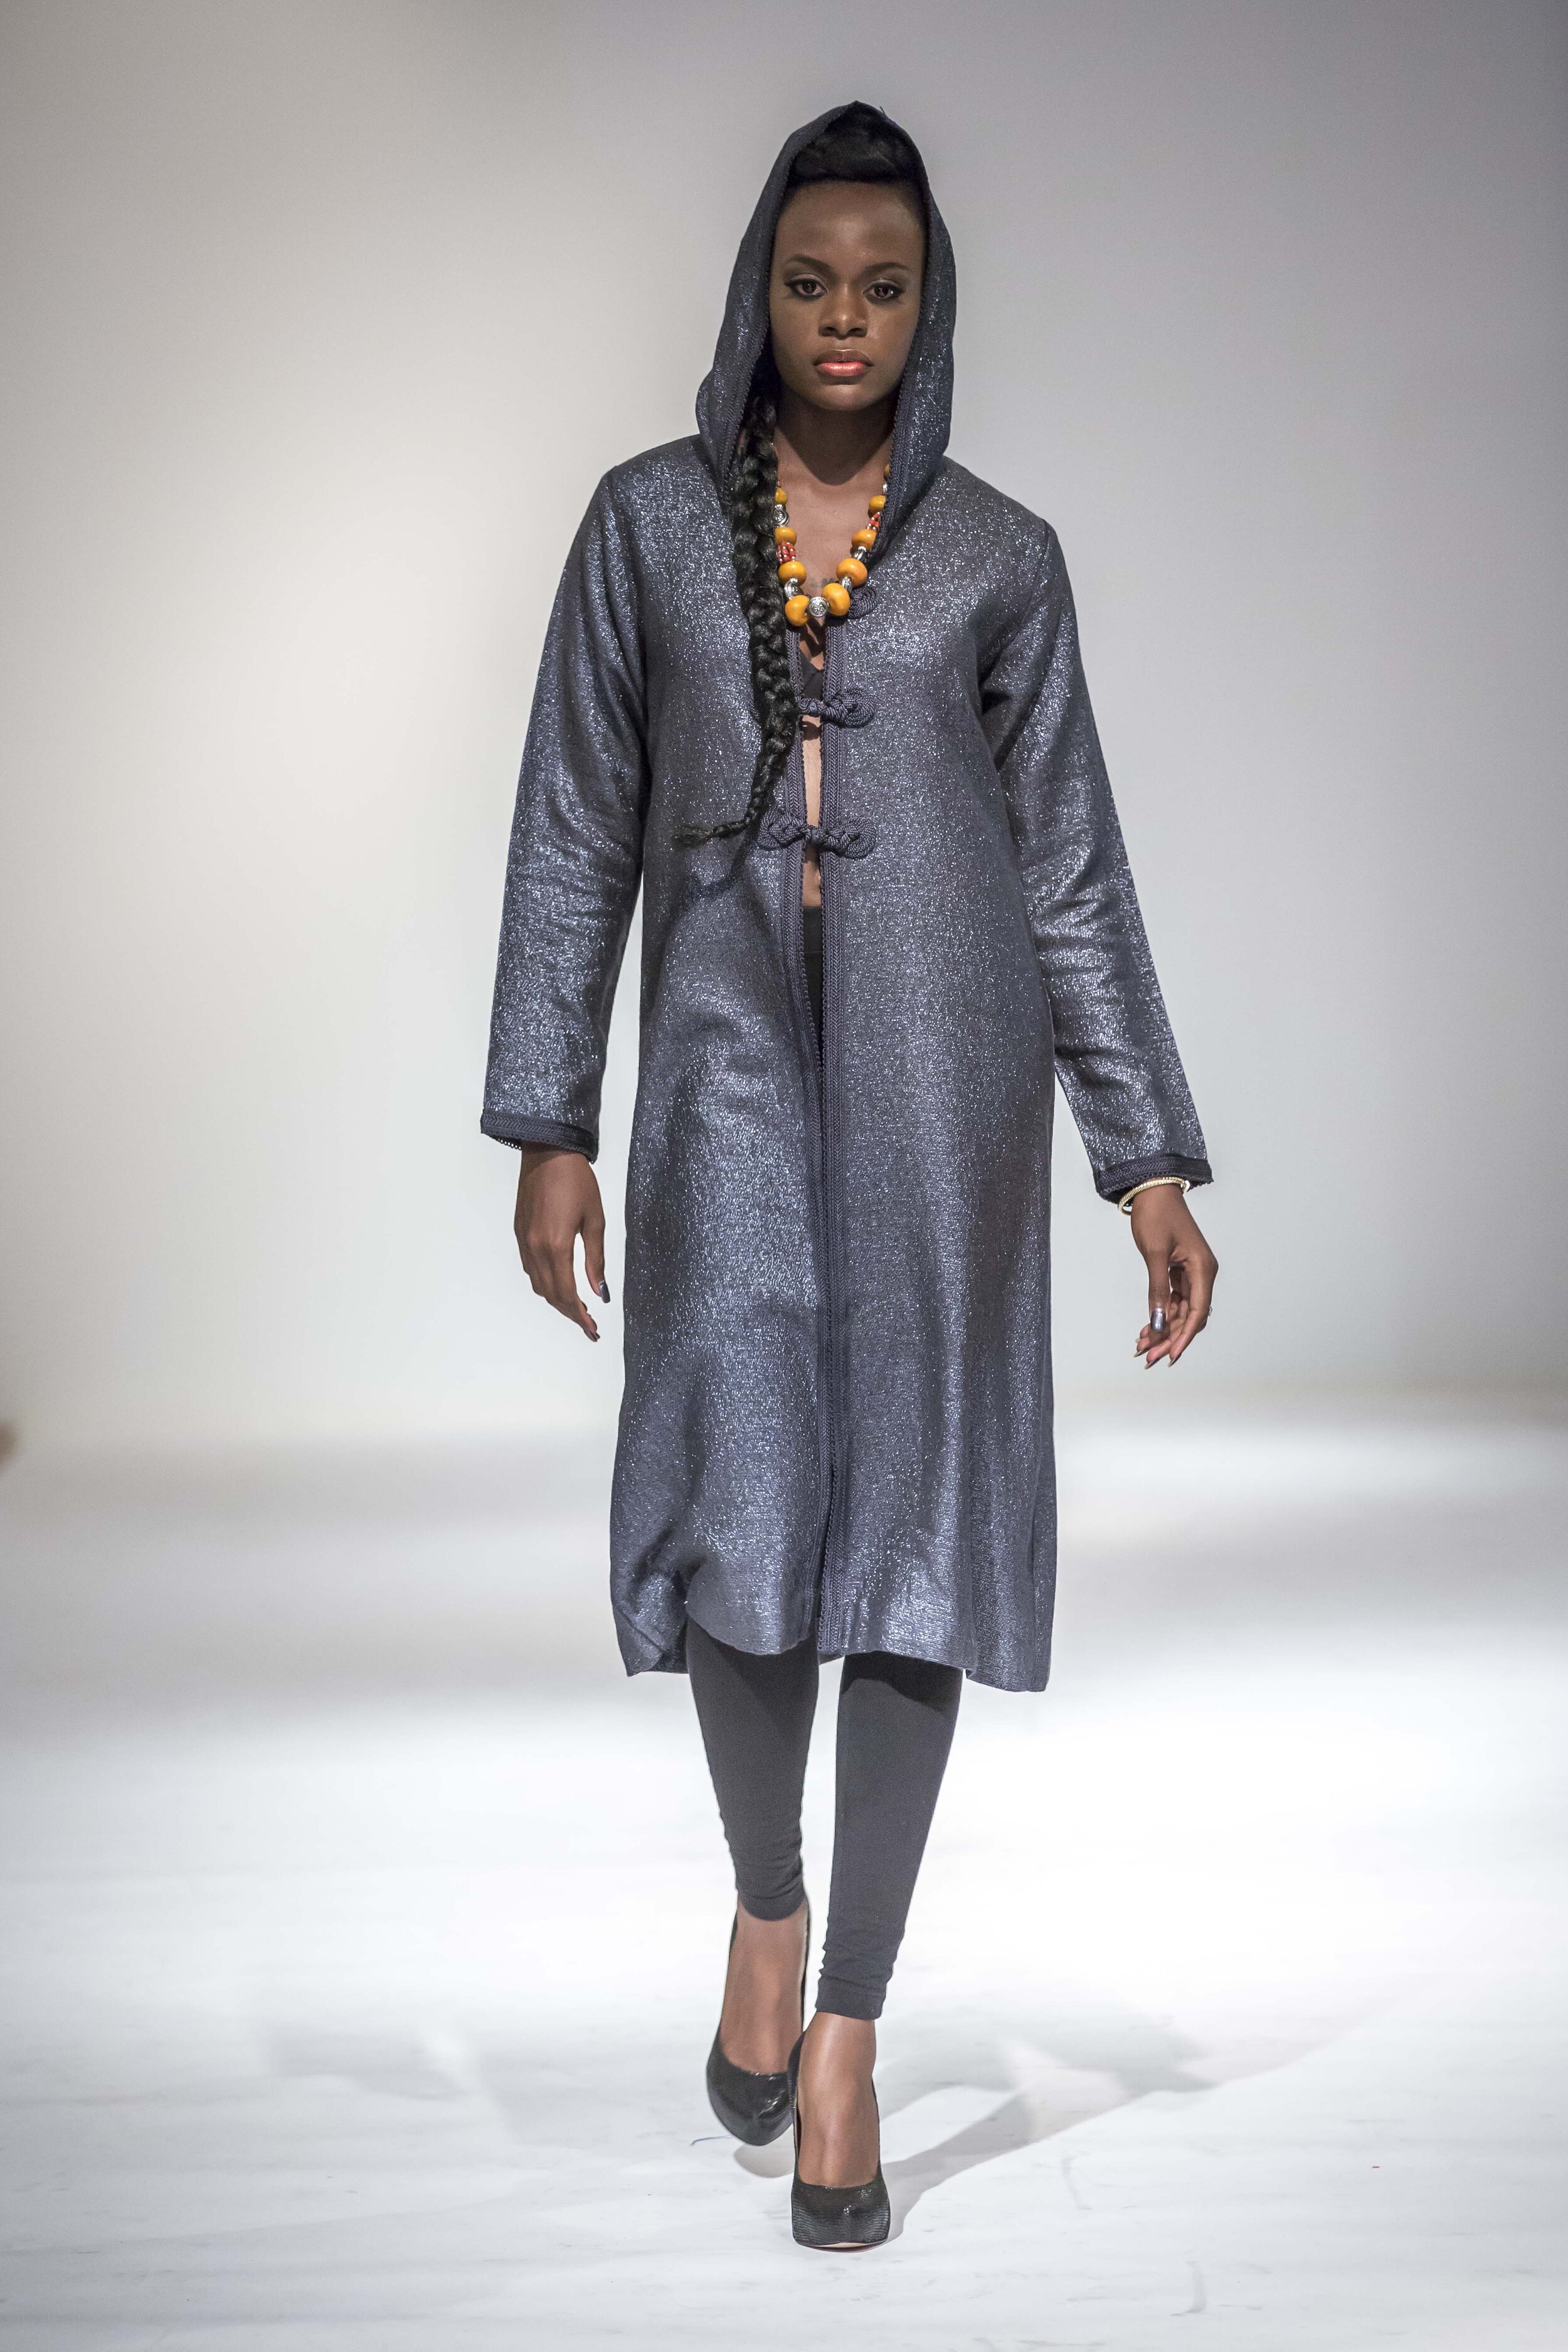 361.Africa-Fashion-Week-New-York-Runway-Show-Morocco-Caftan-New-York.jpg